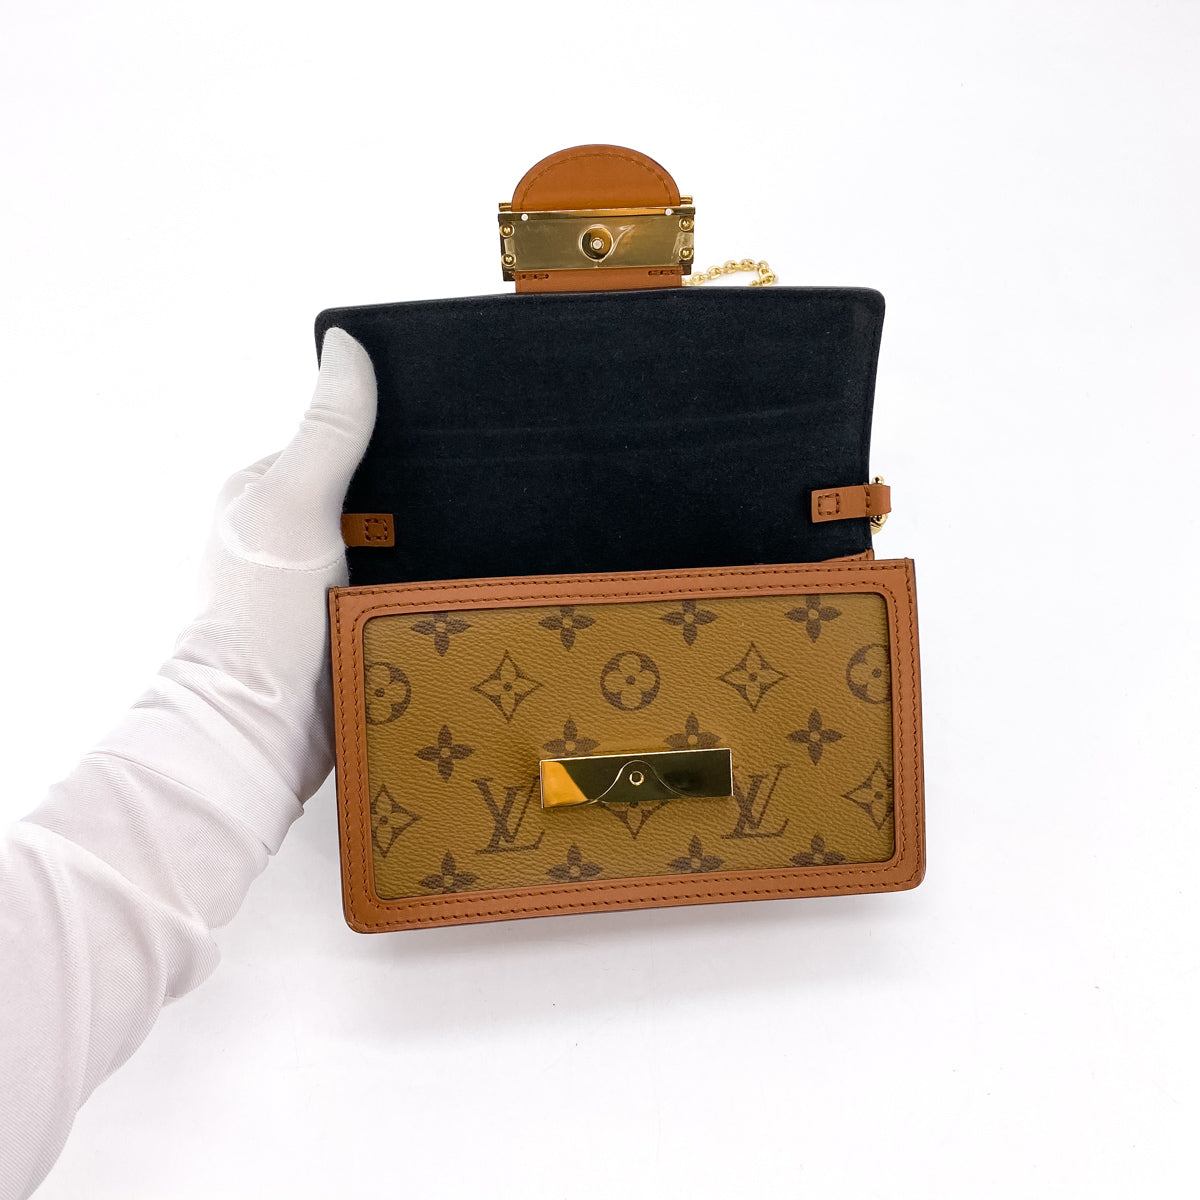 Shop Louis Vuitton MONOGRAM Dauphine chain wallet (M68746) by IledesPins